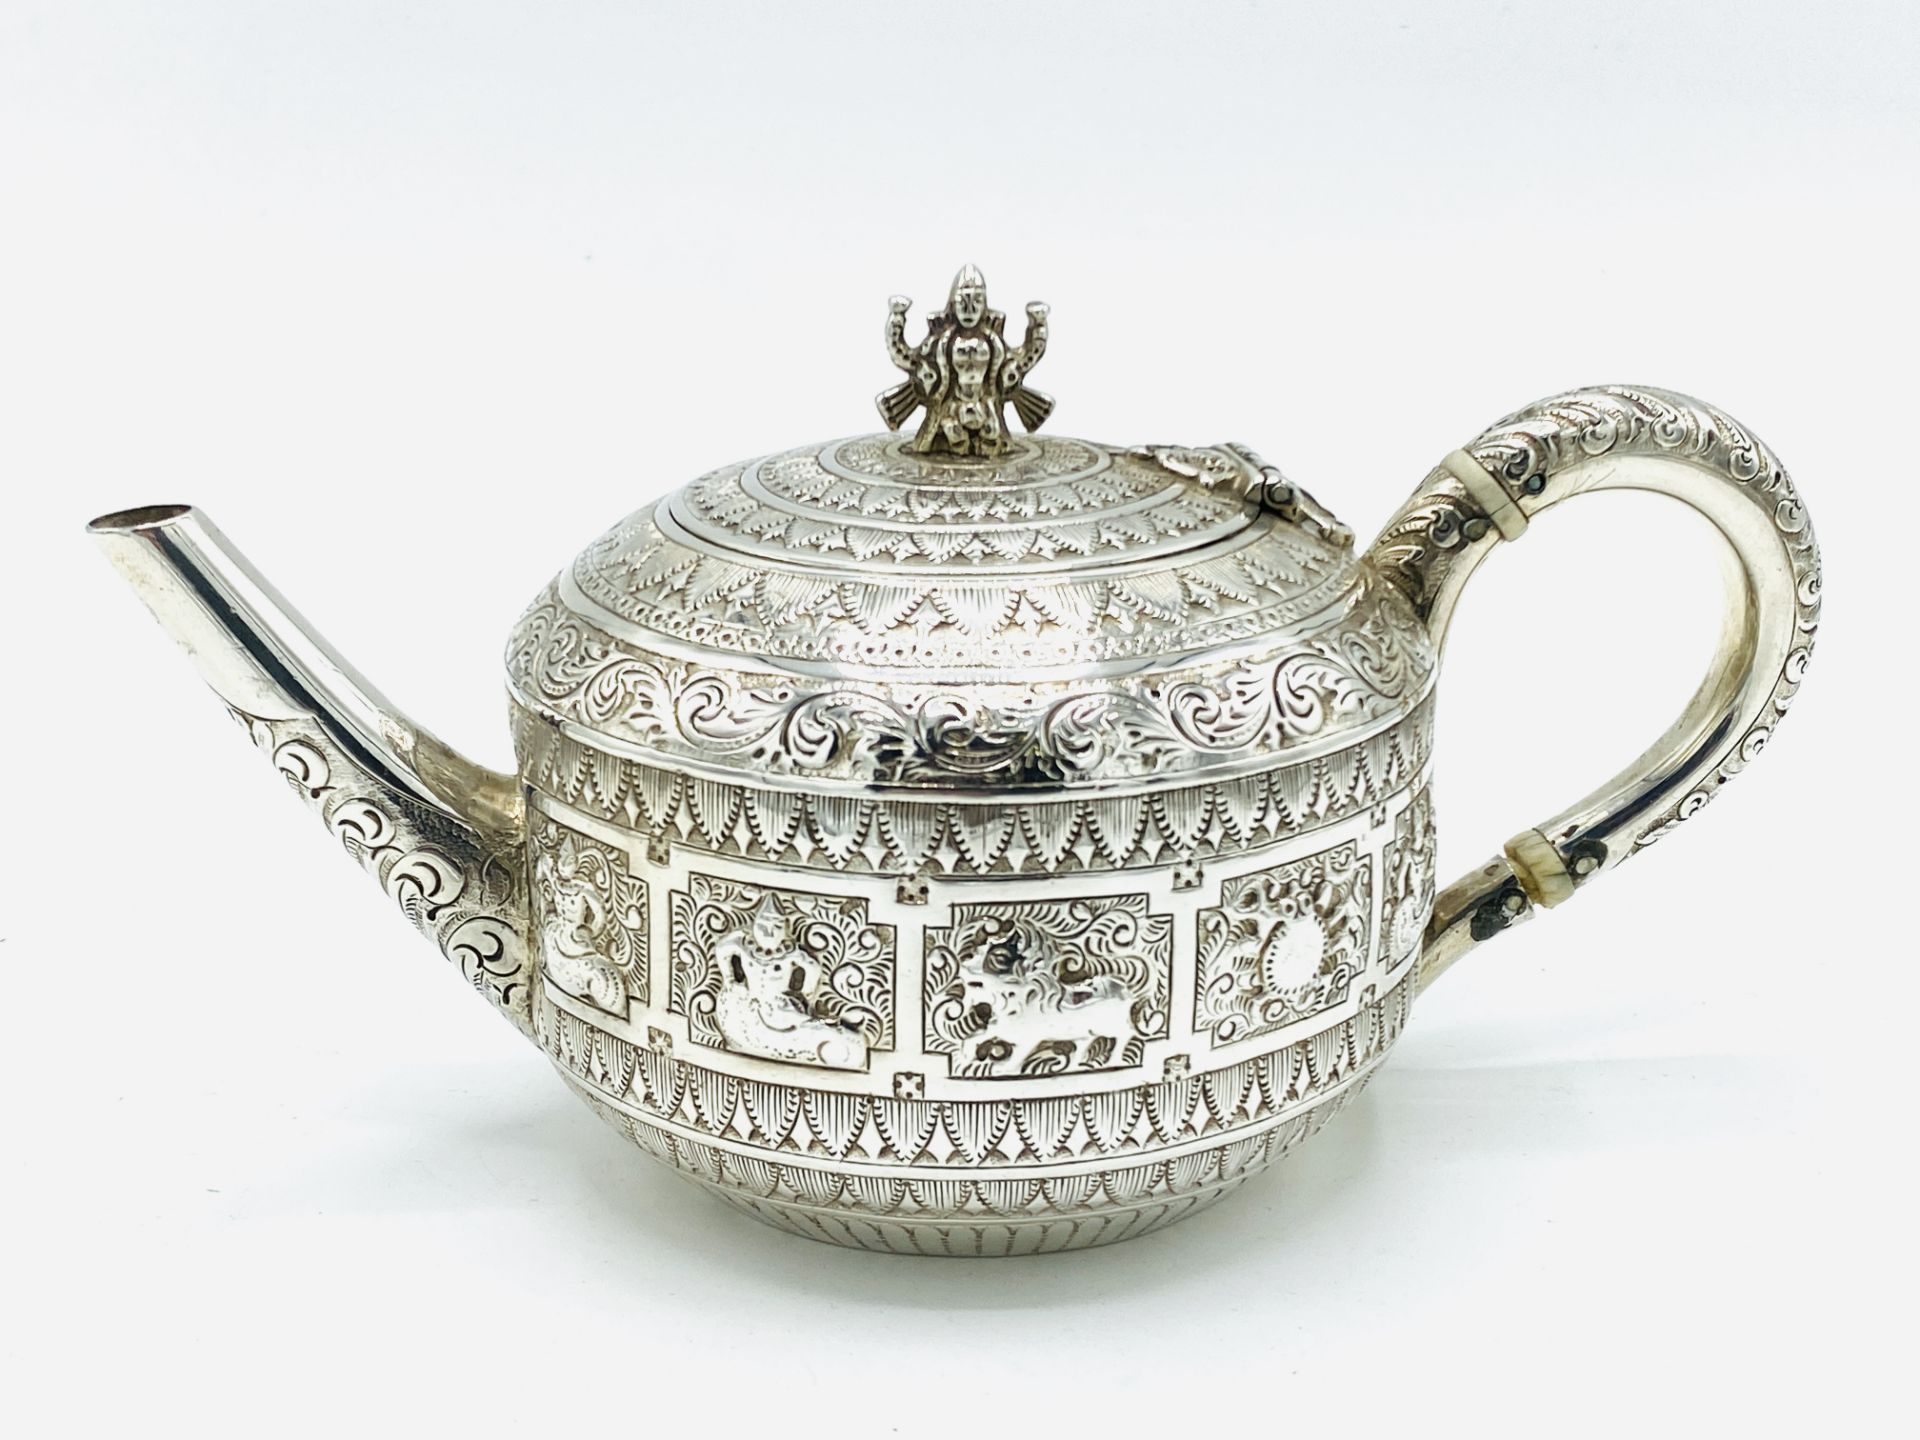 Scottish silver tea service by Hamilton & Inches, hallmarked Edinburgh 1877 - Image 7 of 7